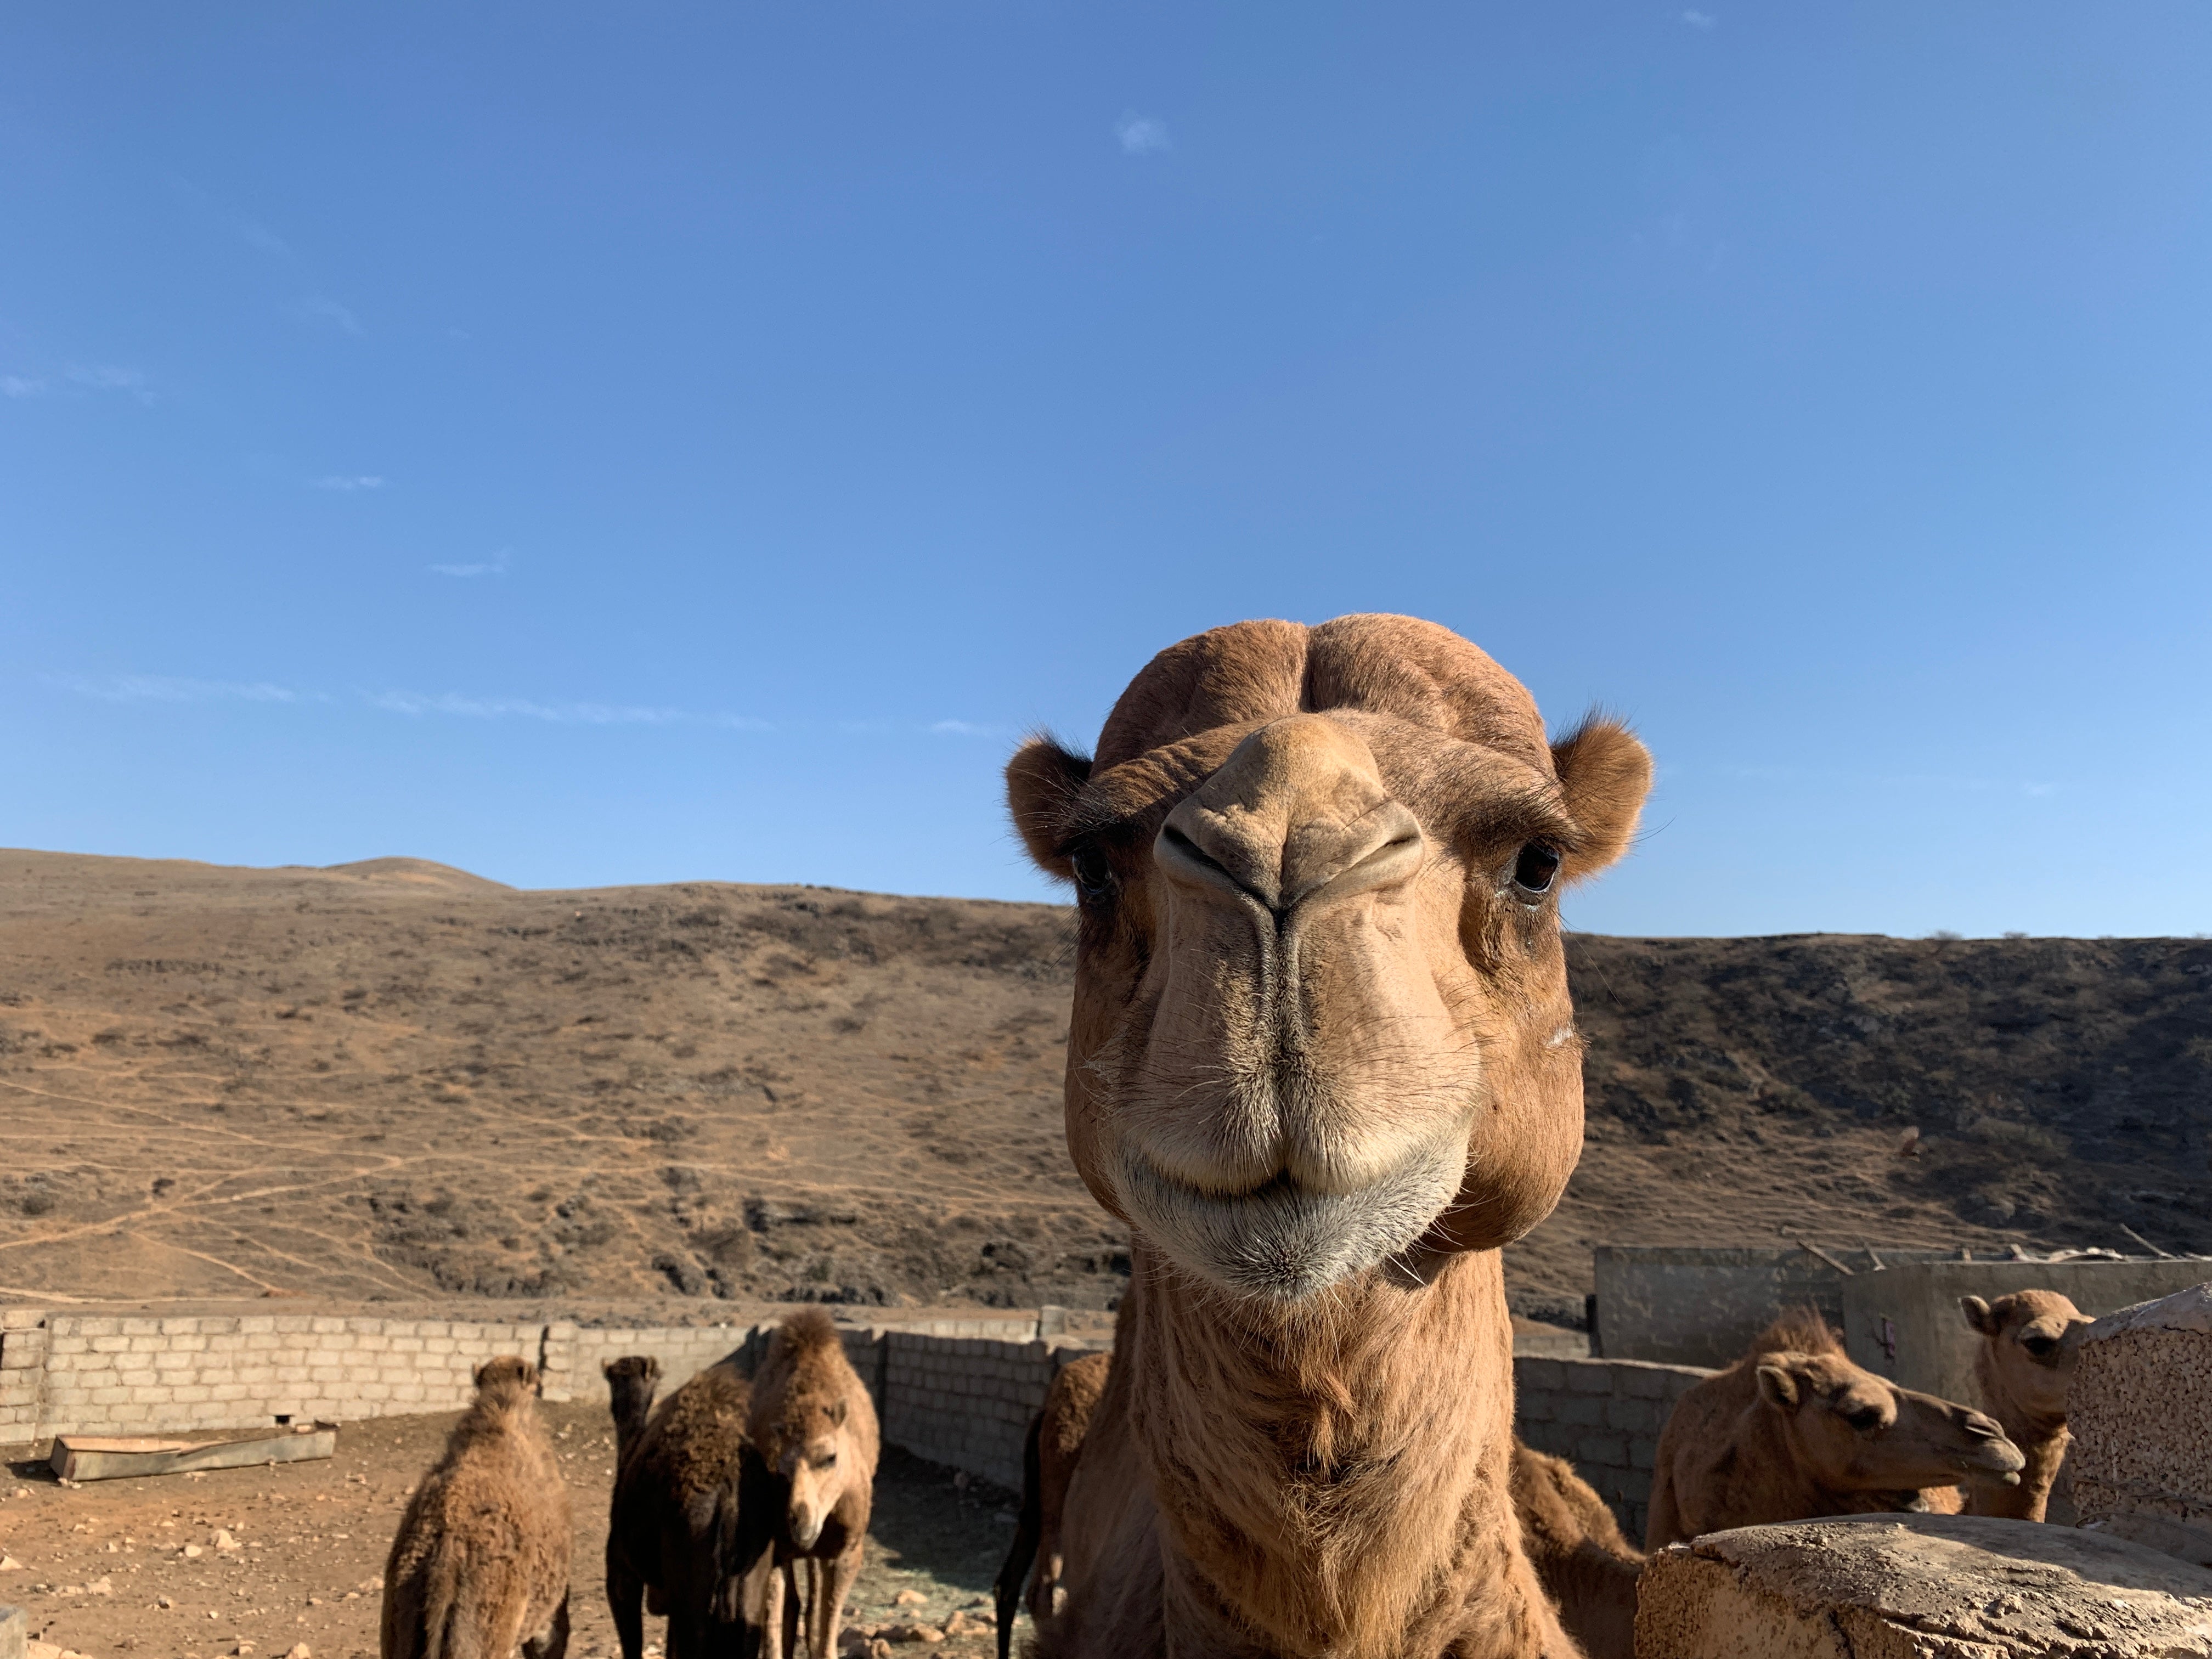 A camel in Oman’s Empty Quarter